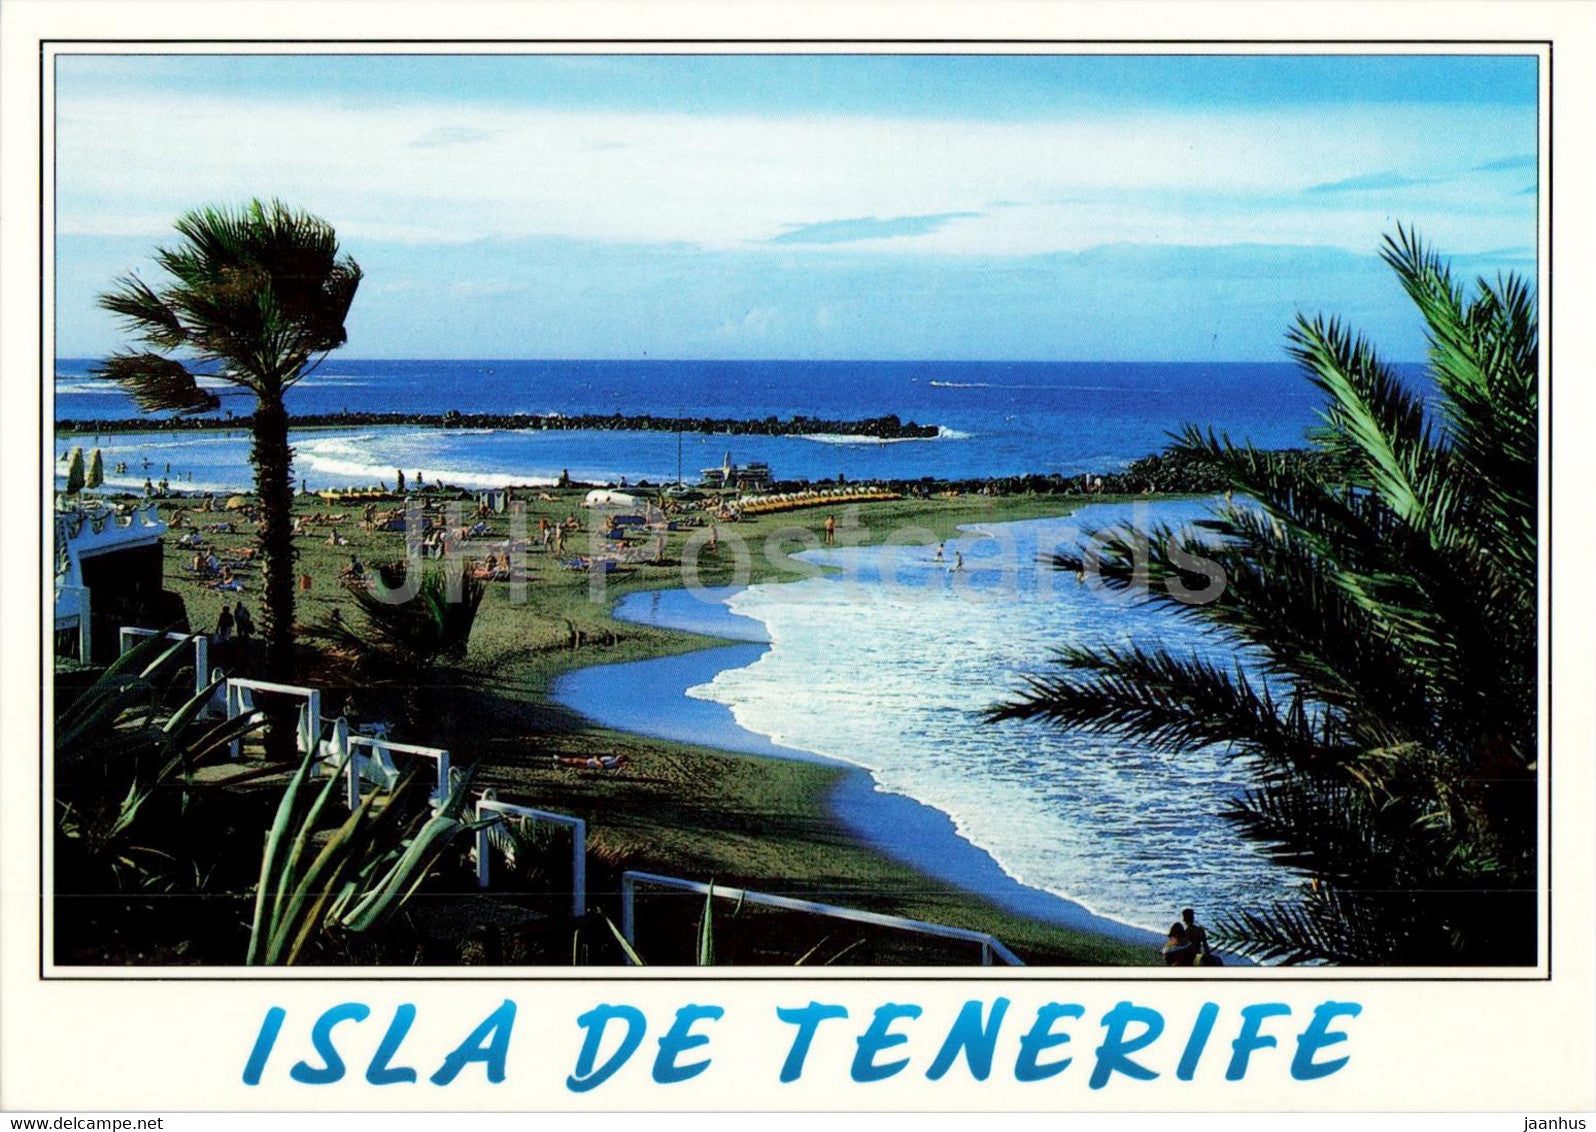 Isla de Tenerife - Playa de las Americas - Spain - used - JH Postcards